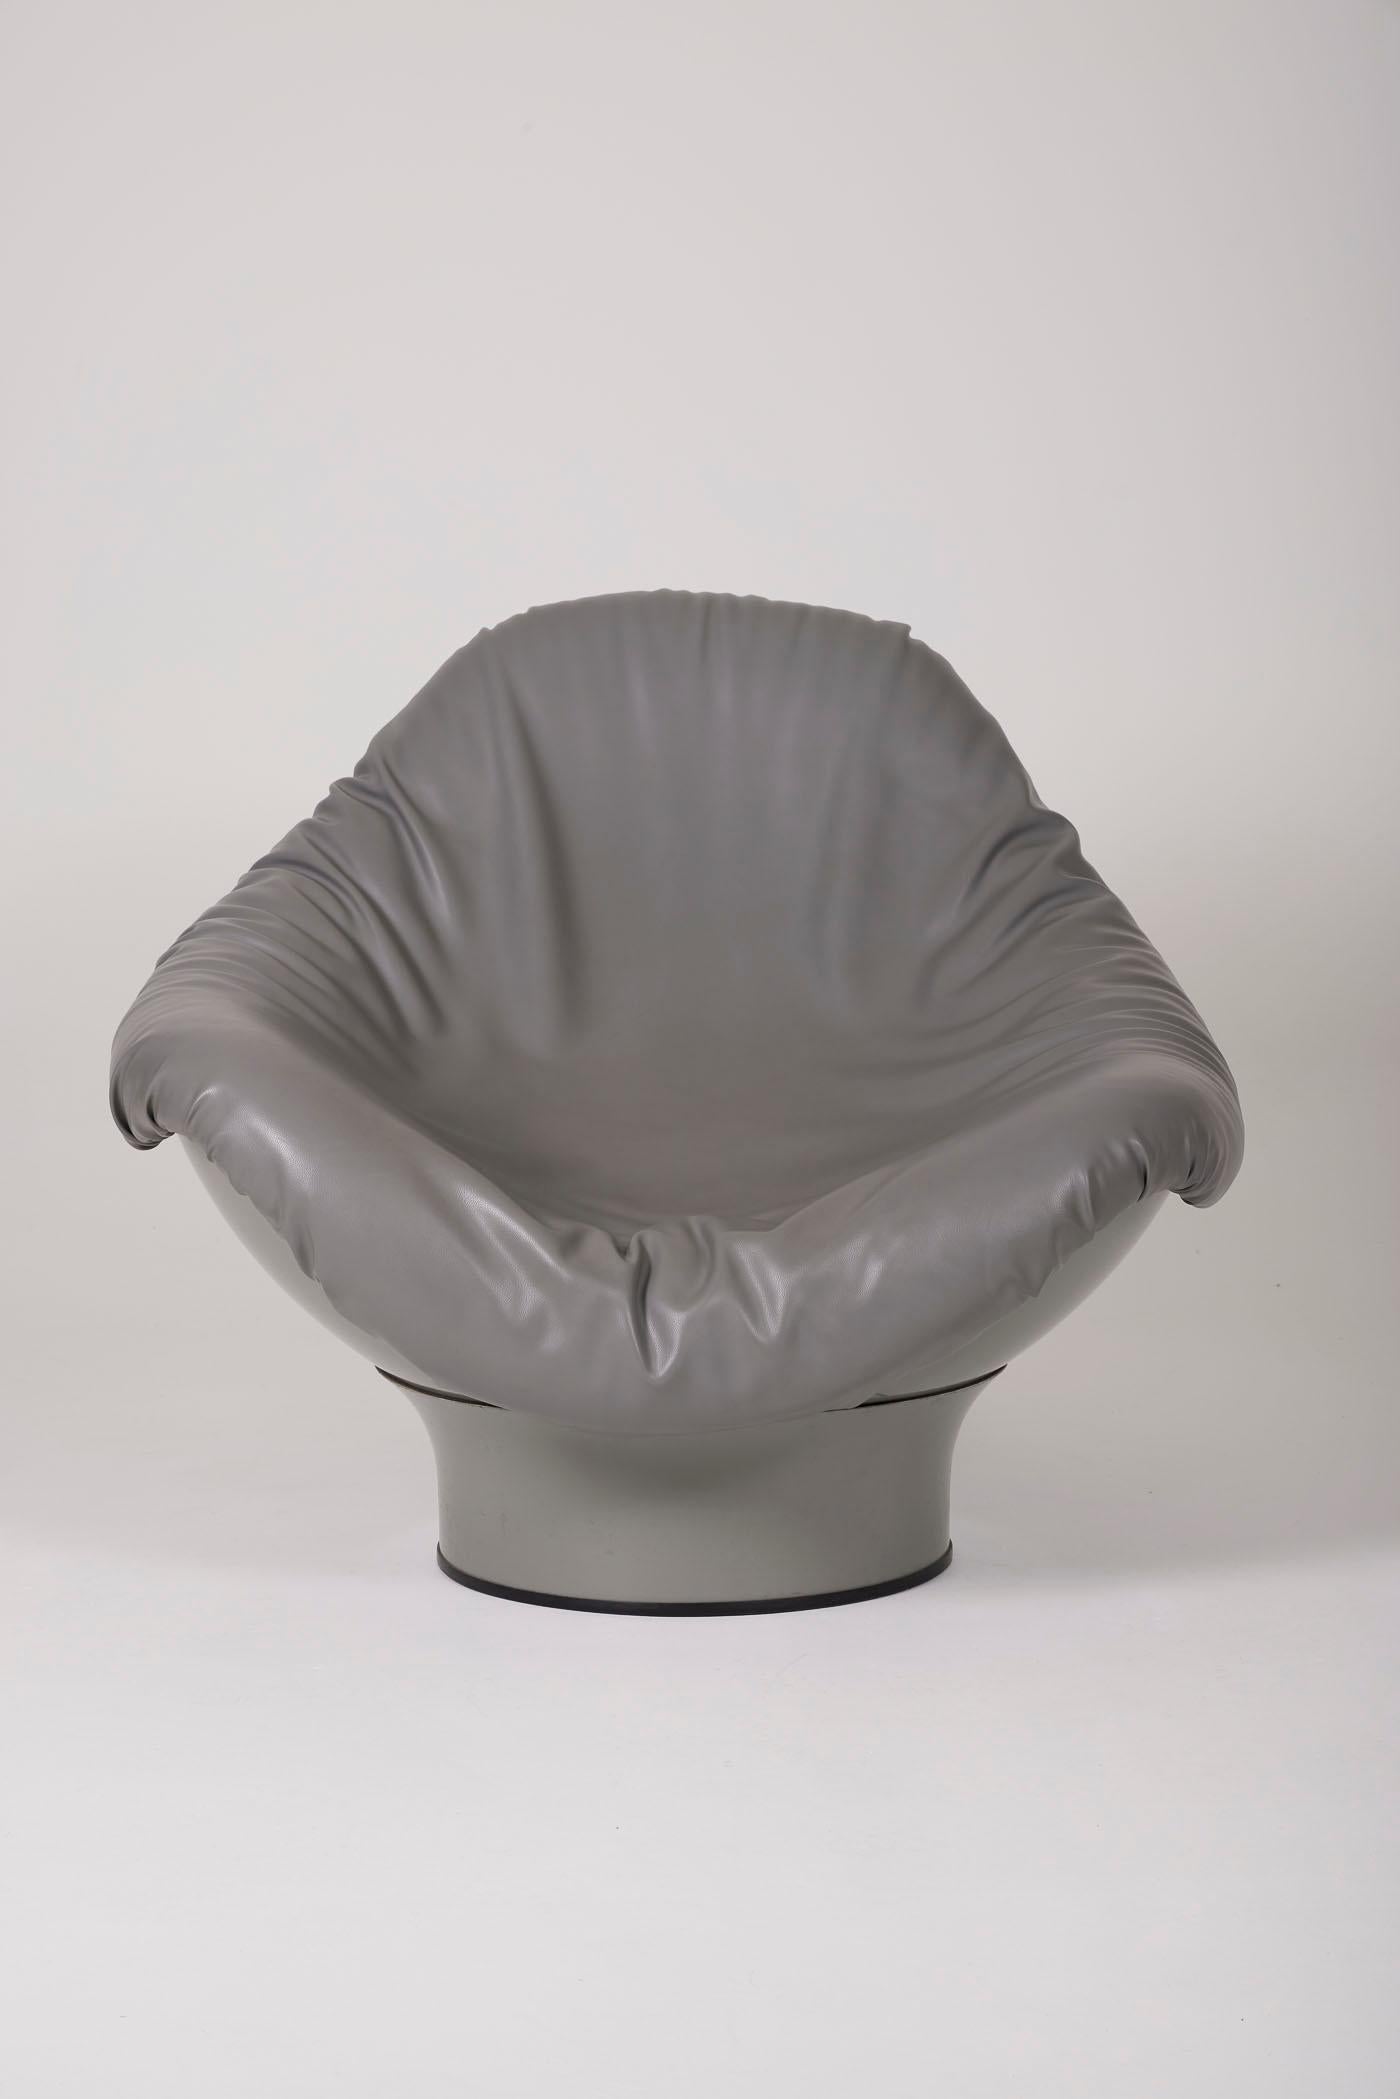 Mario Brunu armchair For Sale 1